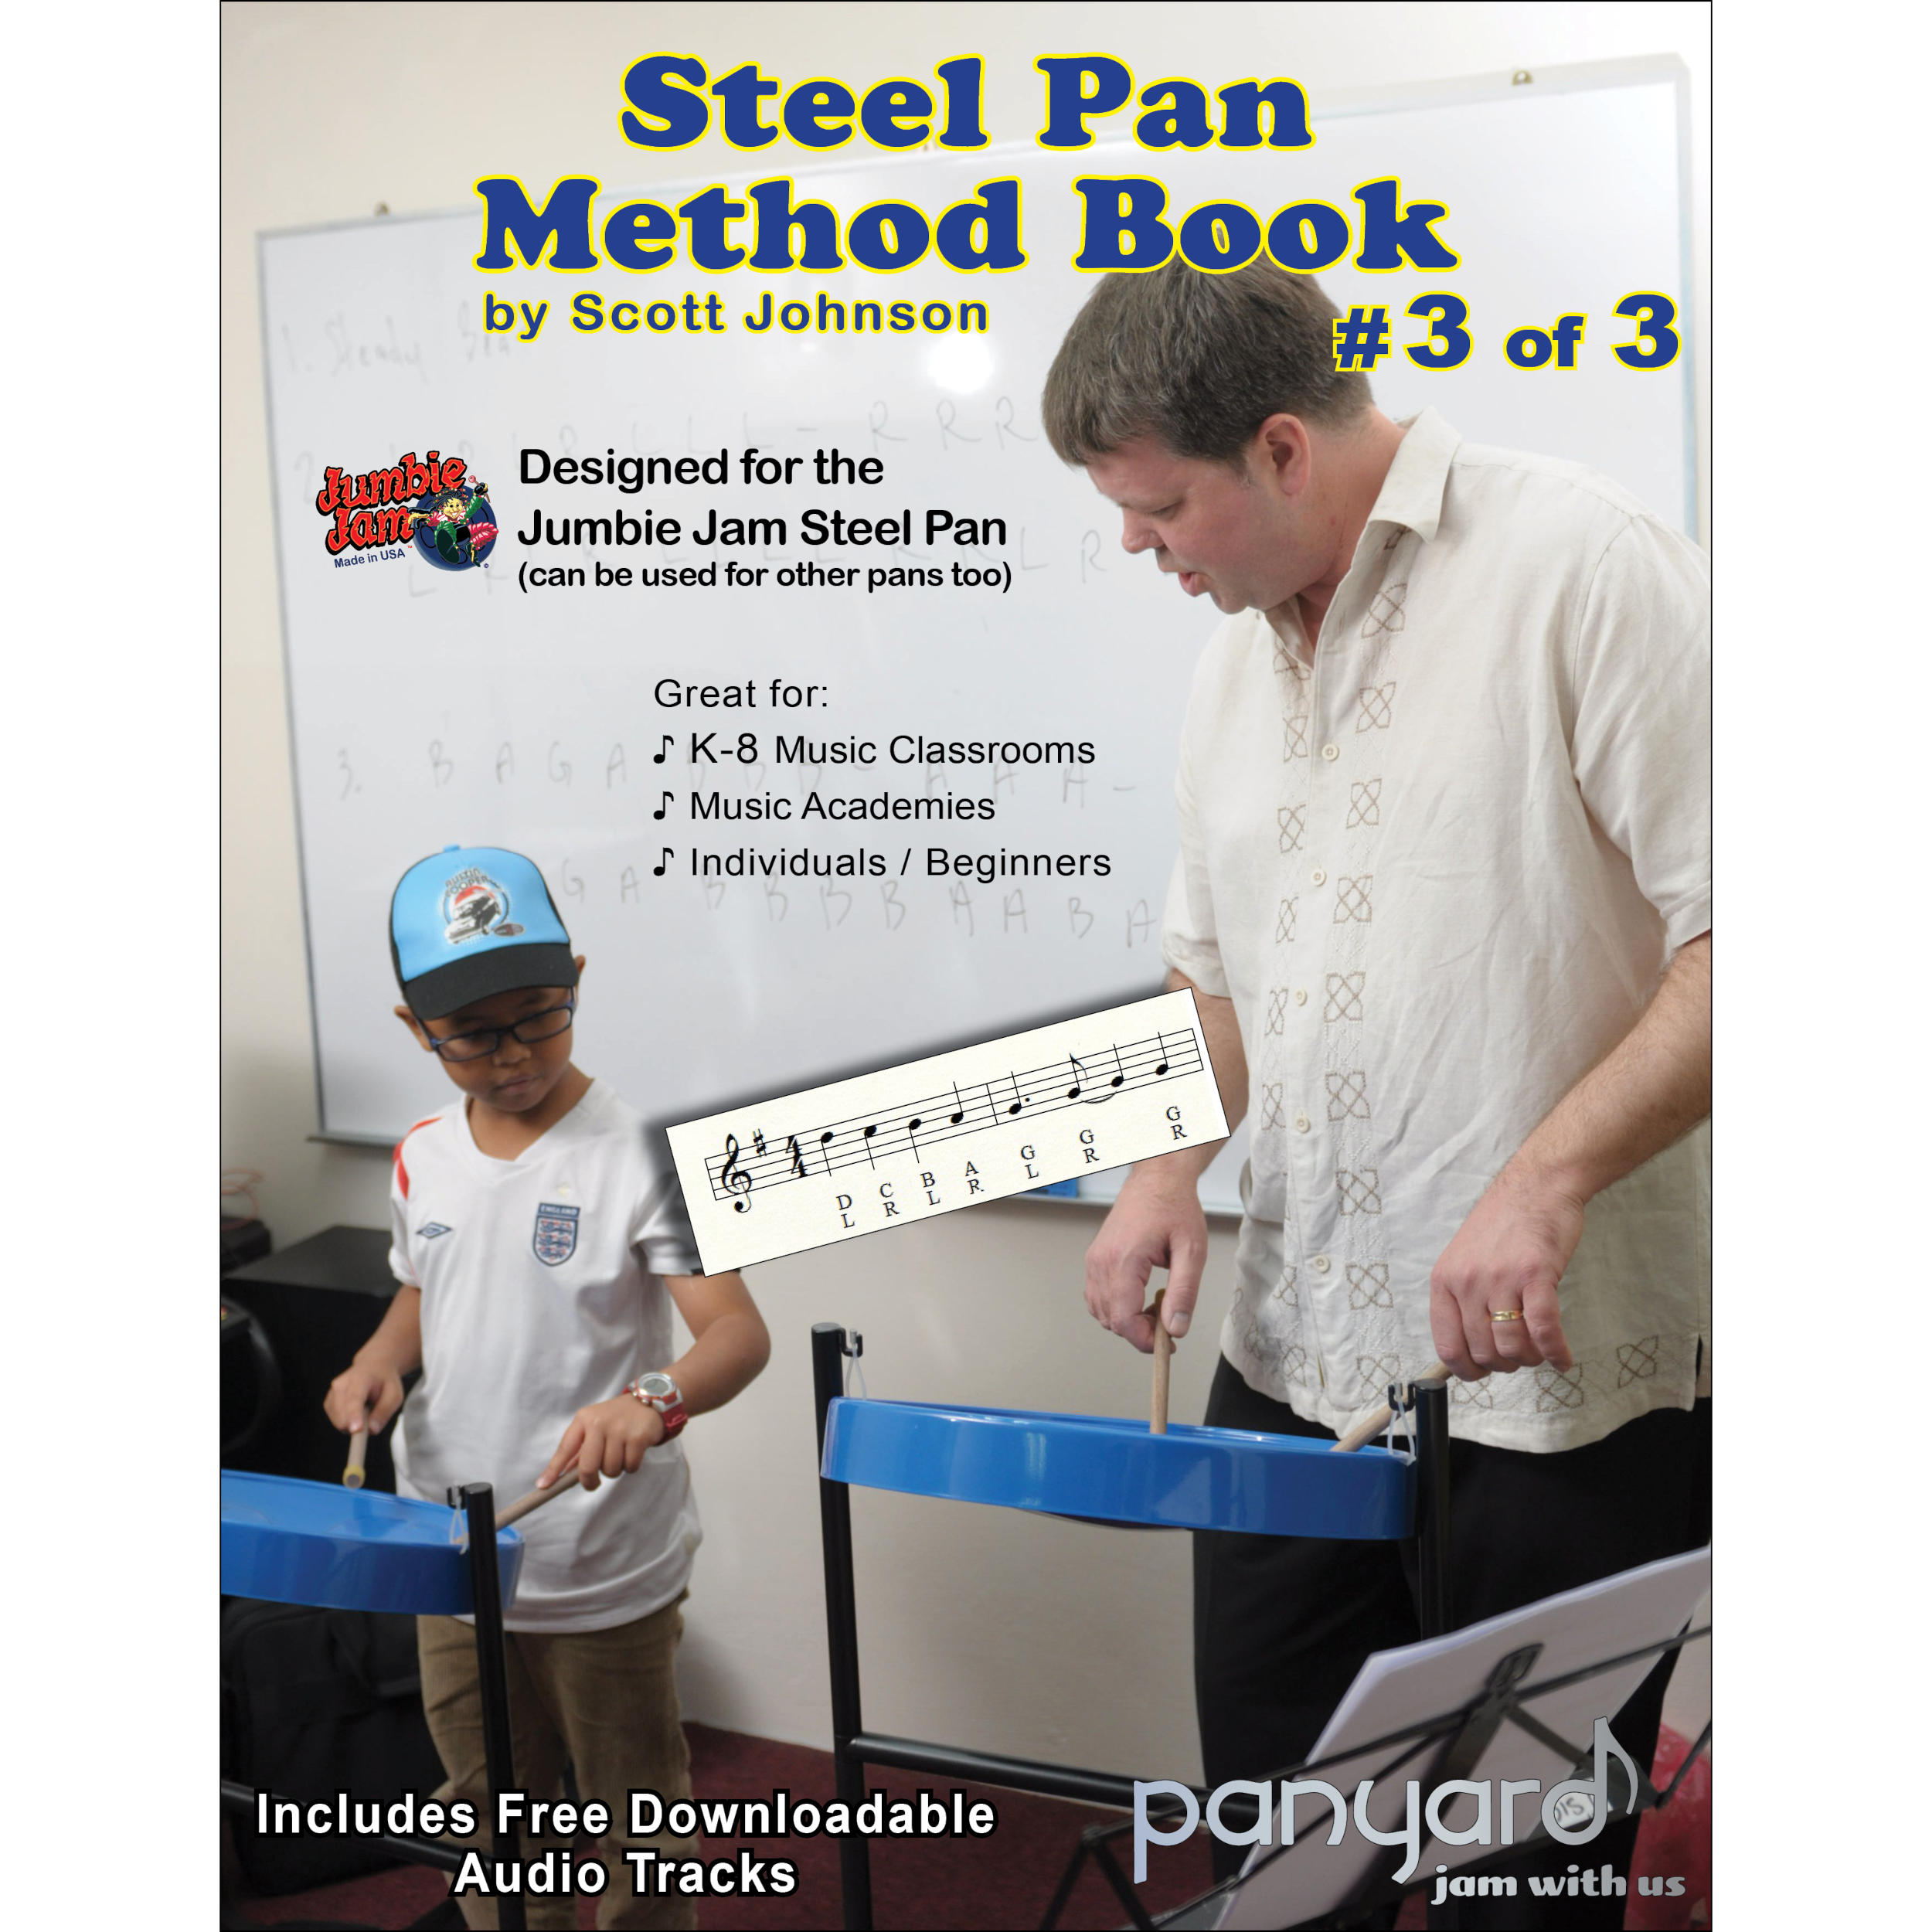 Panyard Jumbie Jam Steel Pan Method Book 3 of 3